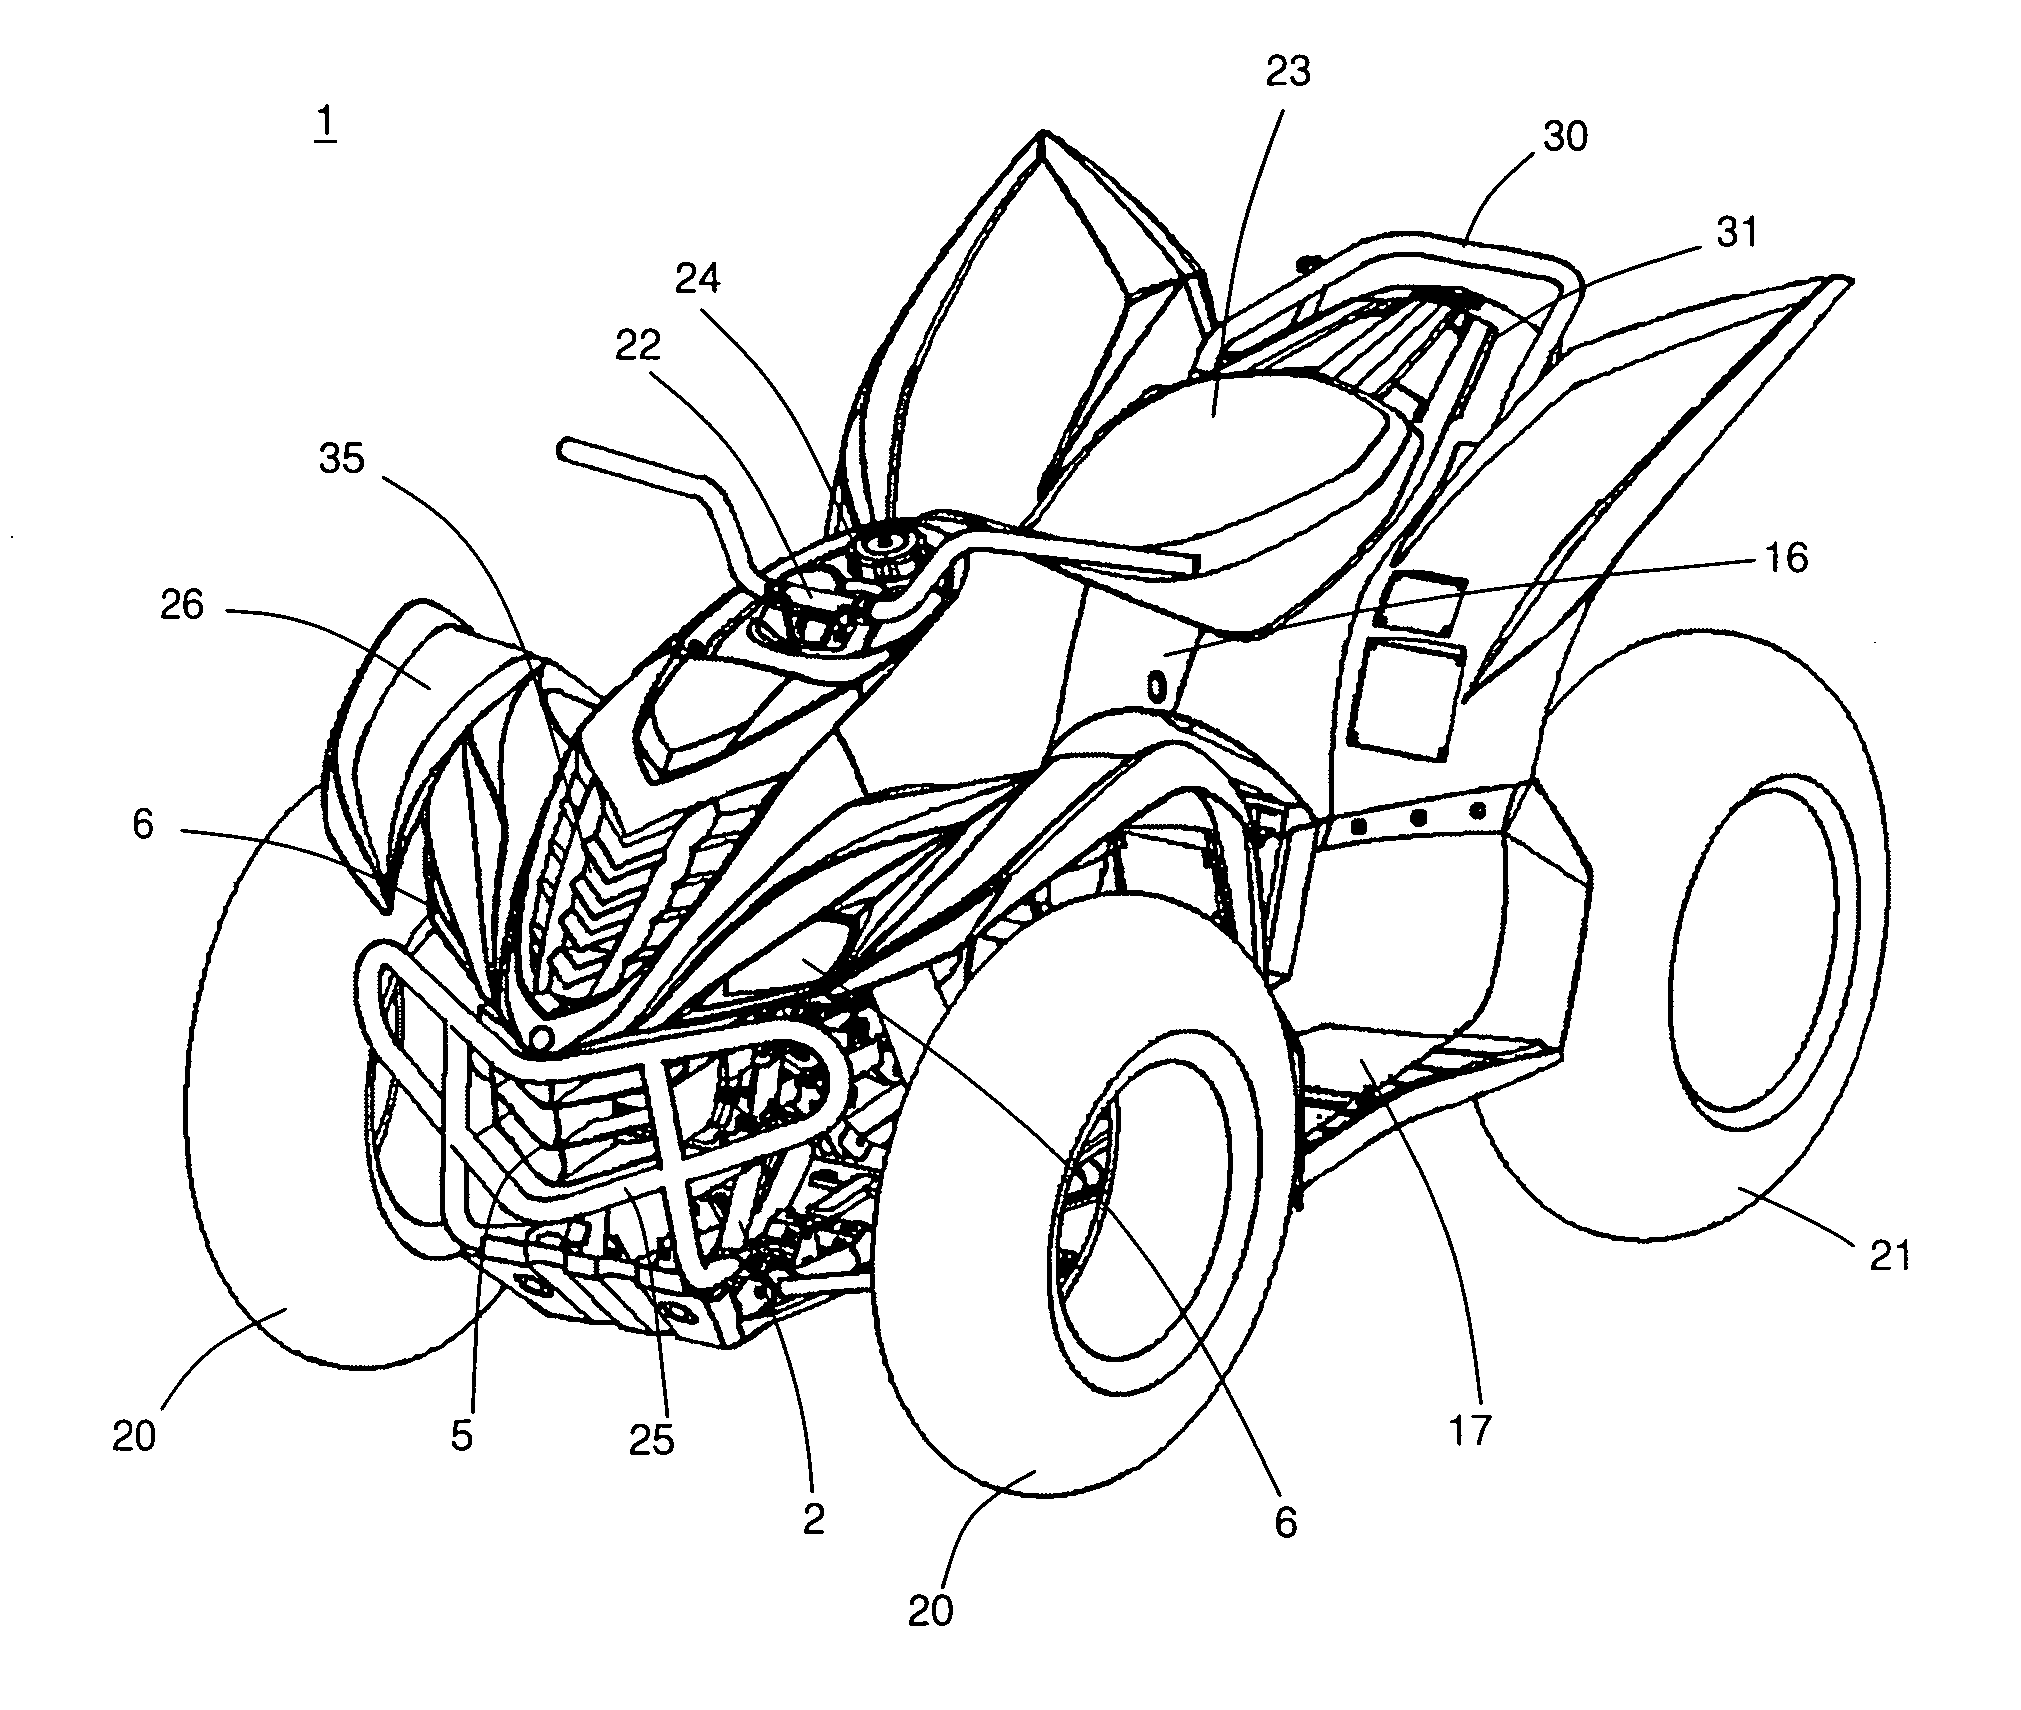 Bracket assembly for all-terrain vehicle